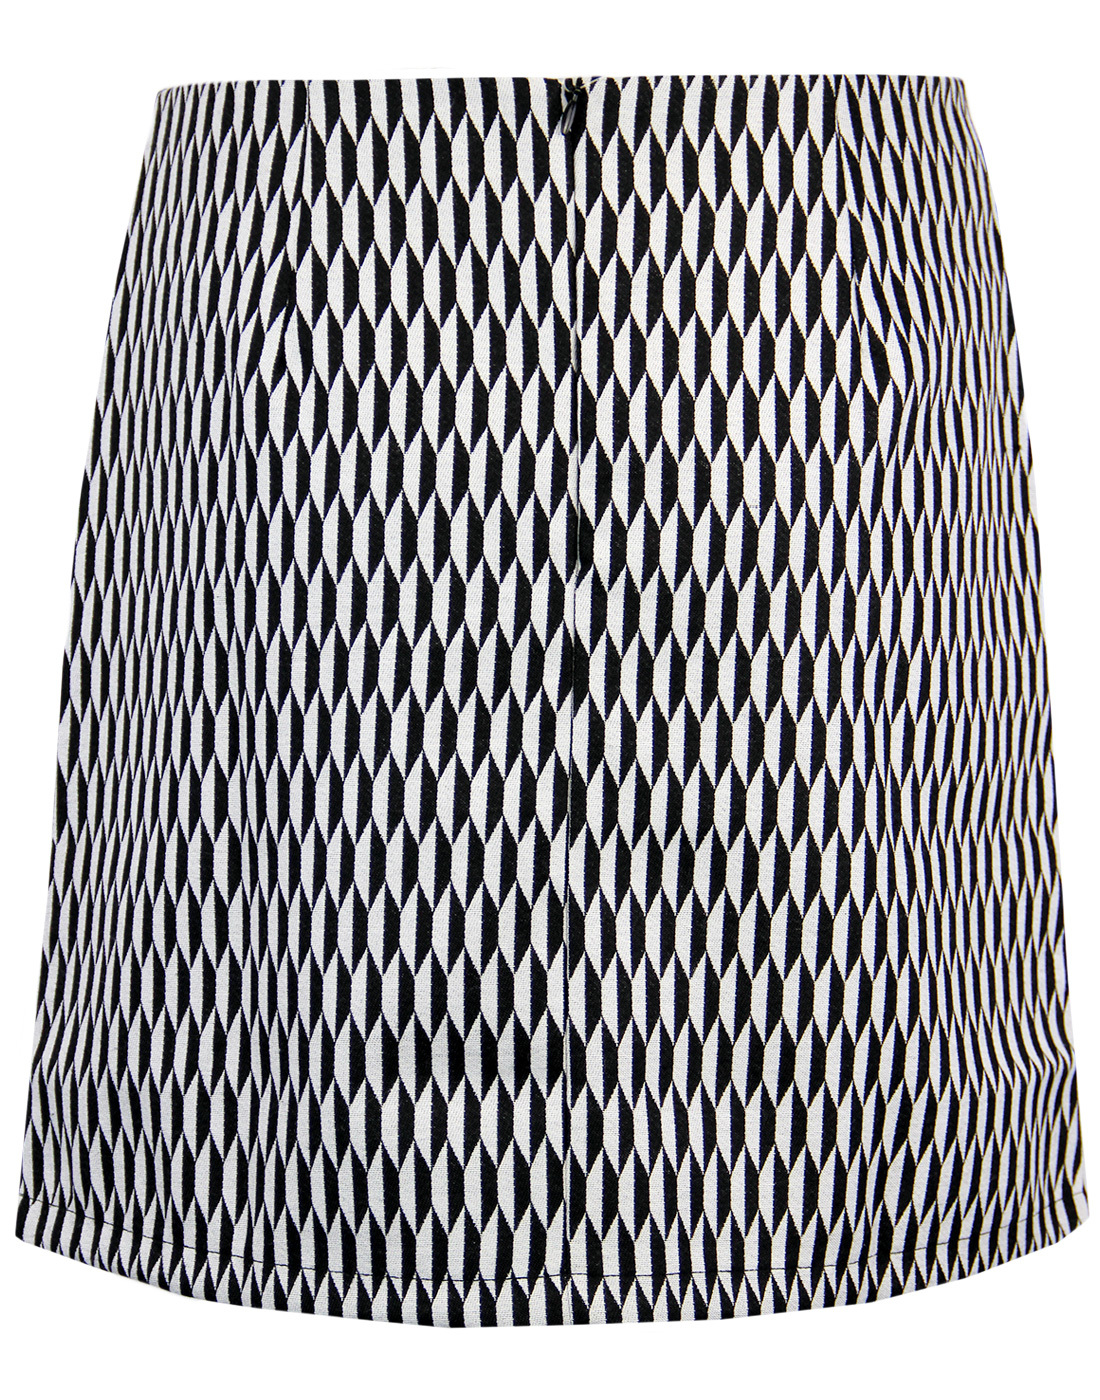 MADCAP ENGLAND Karina Retro Mod Op Art Mini Skirt in Black/White